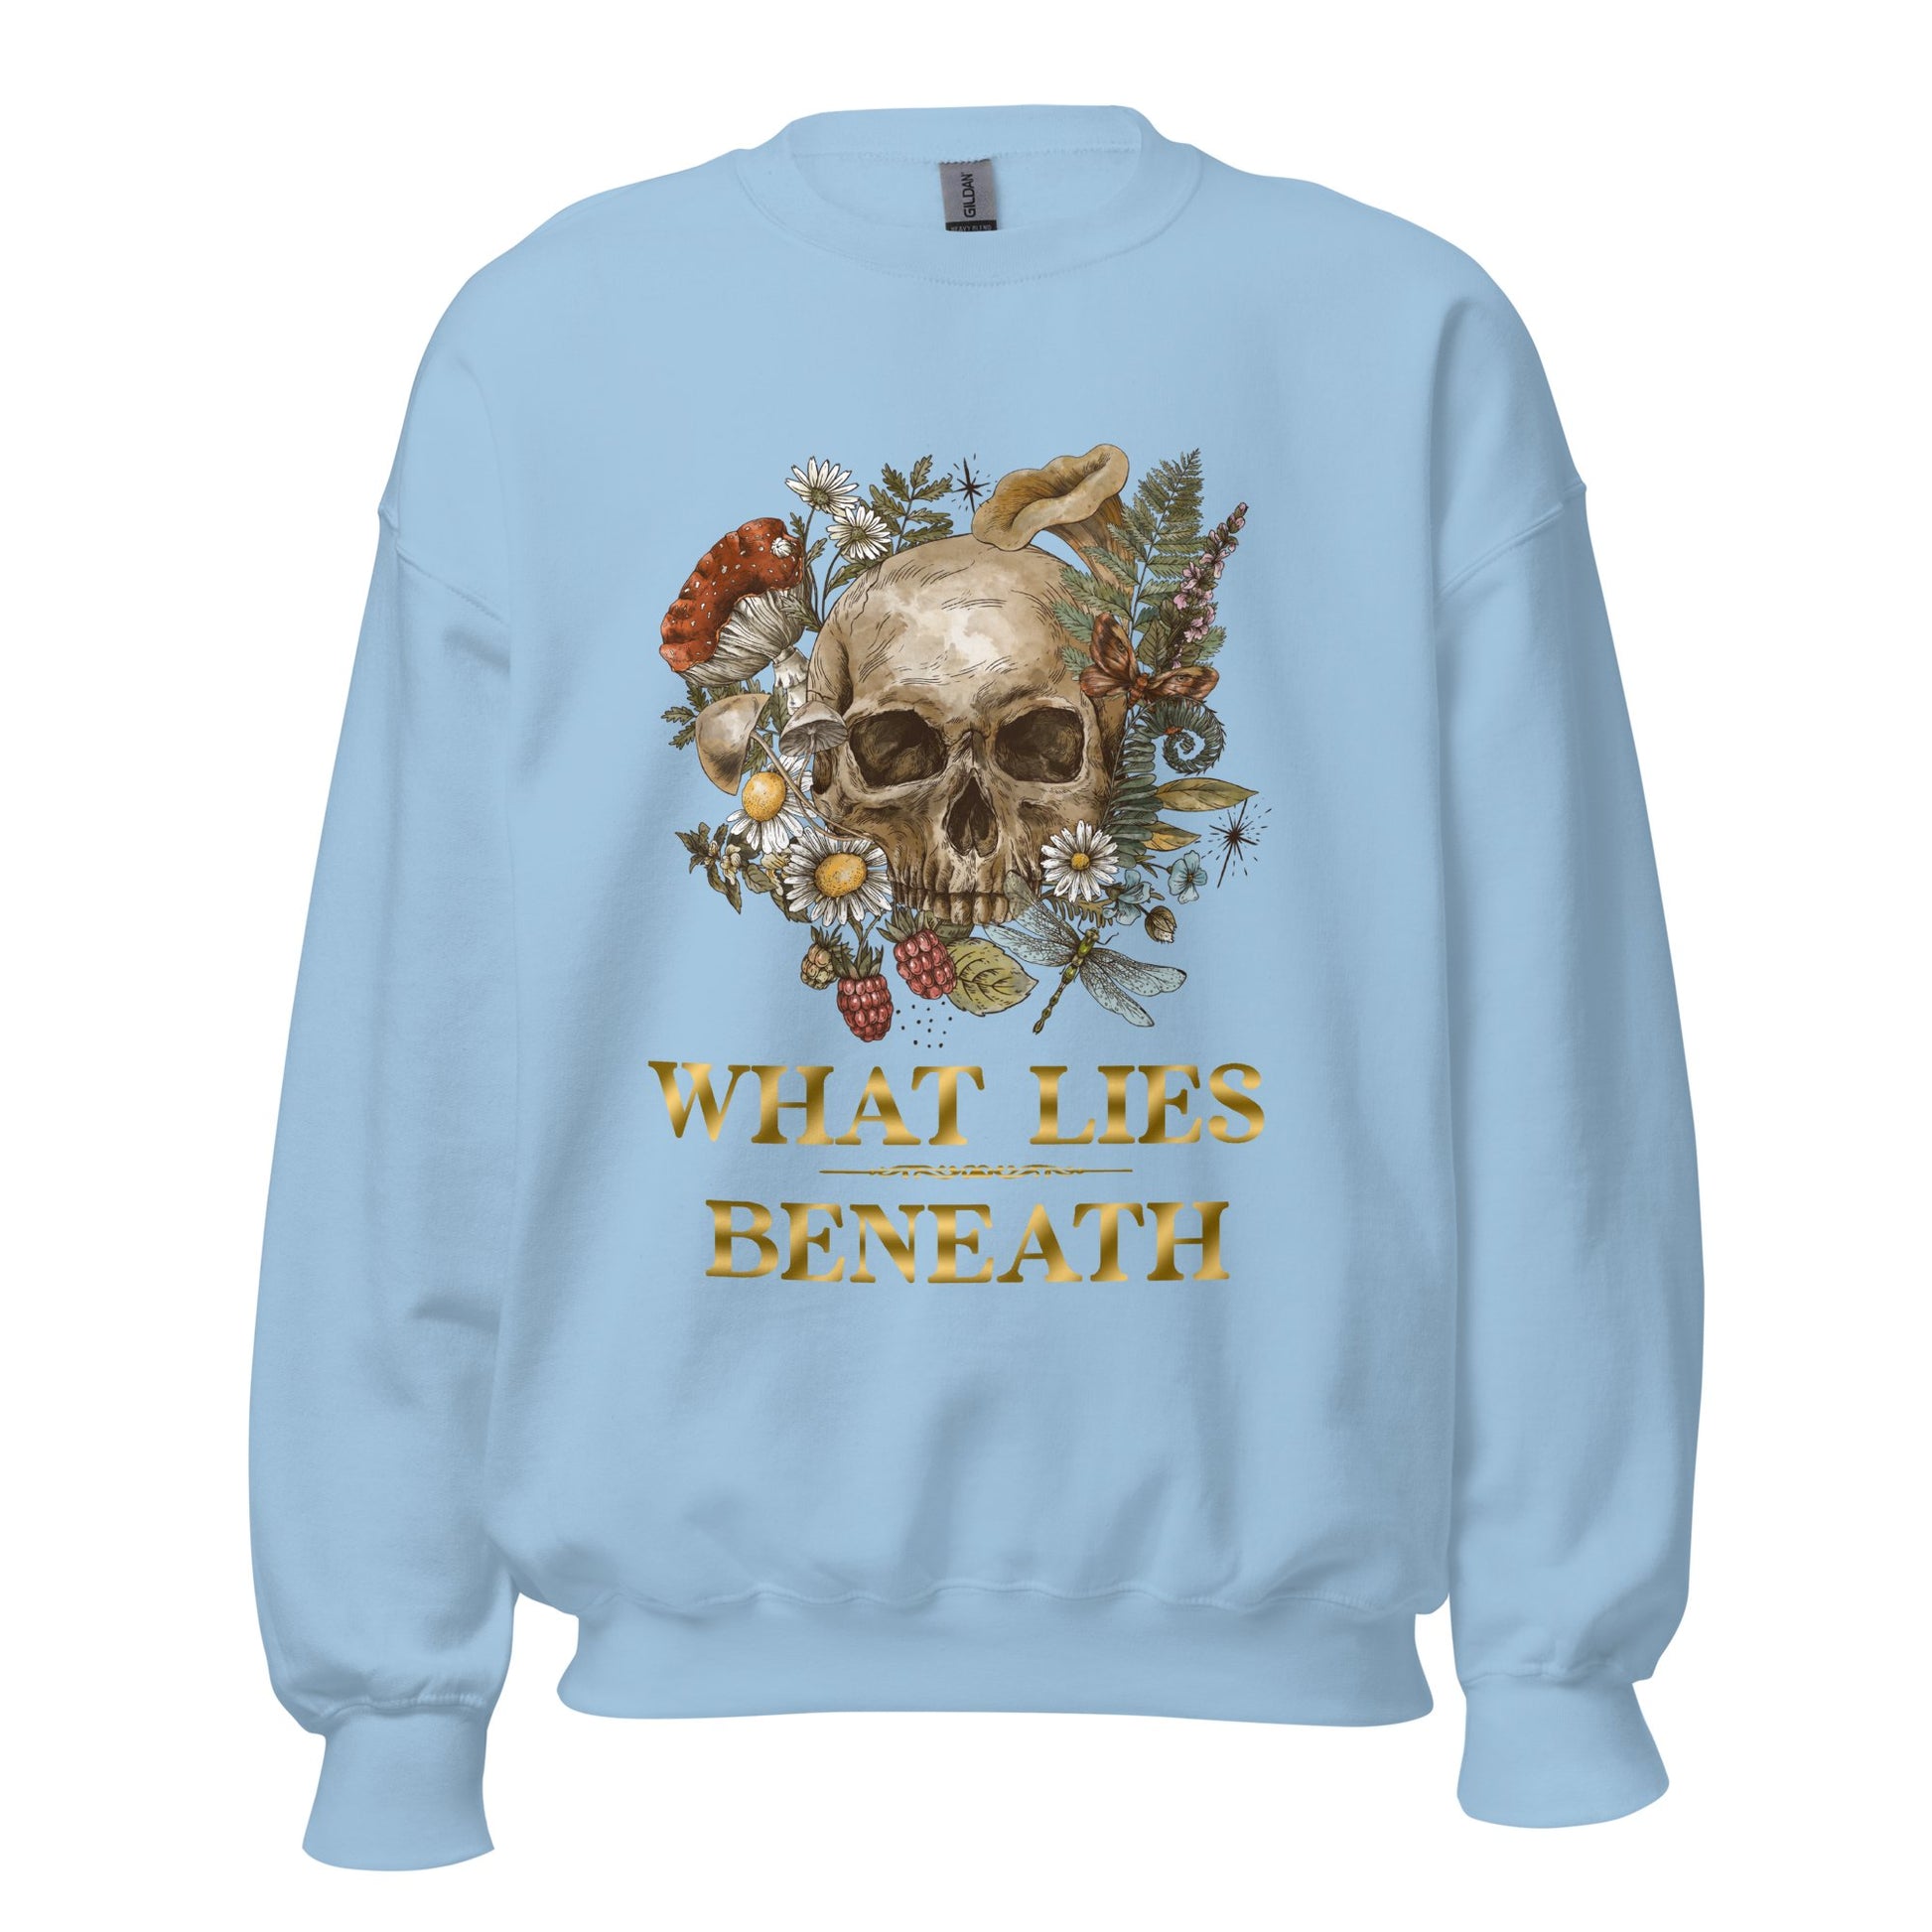 What Lies Beneath Premium Gildan Sweatshirt - Bearclothing